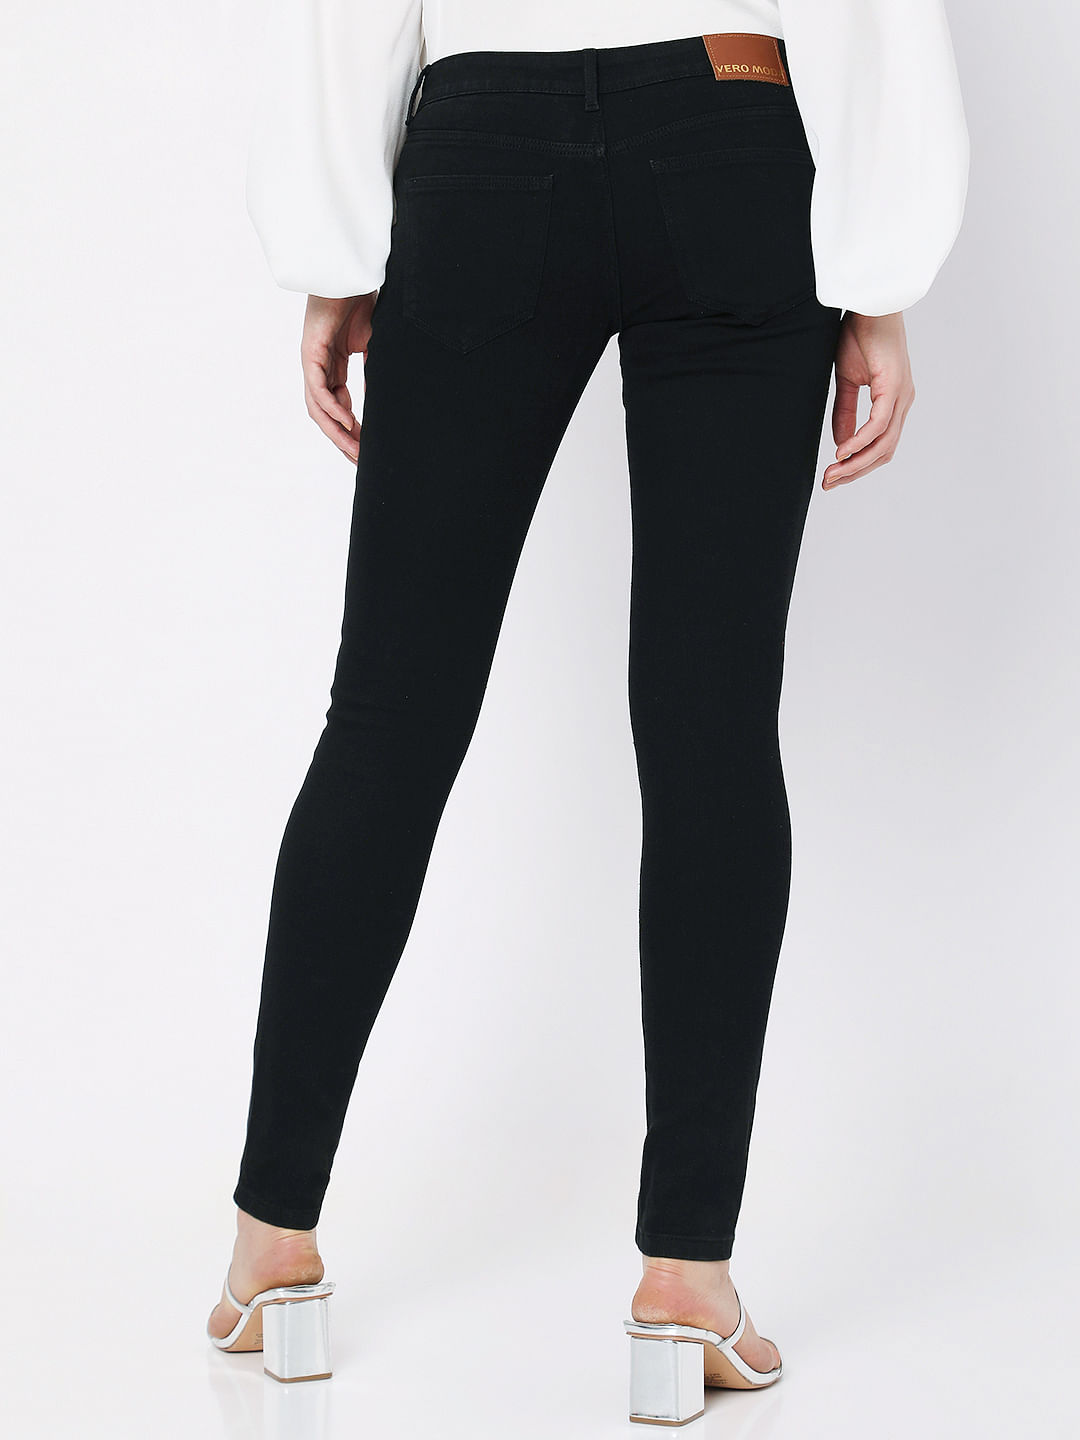 Buy Jet Black Skinny Fit Original Stretch Jeans Online at Muftijeans